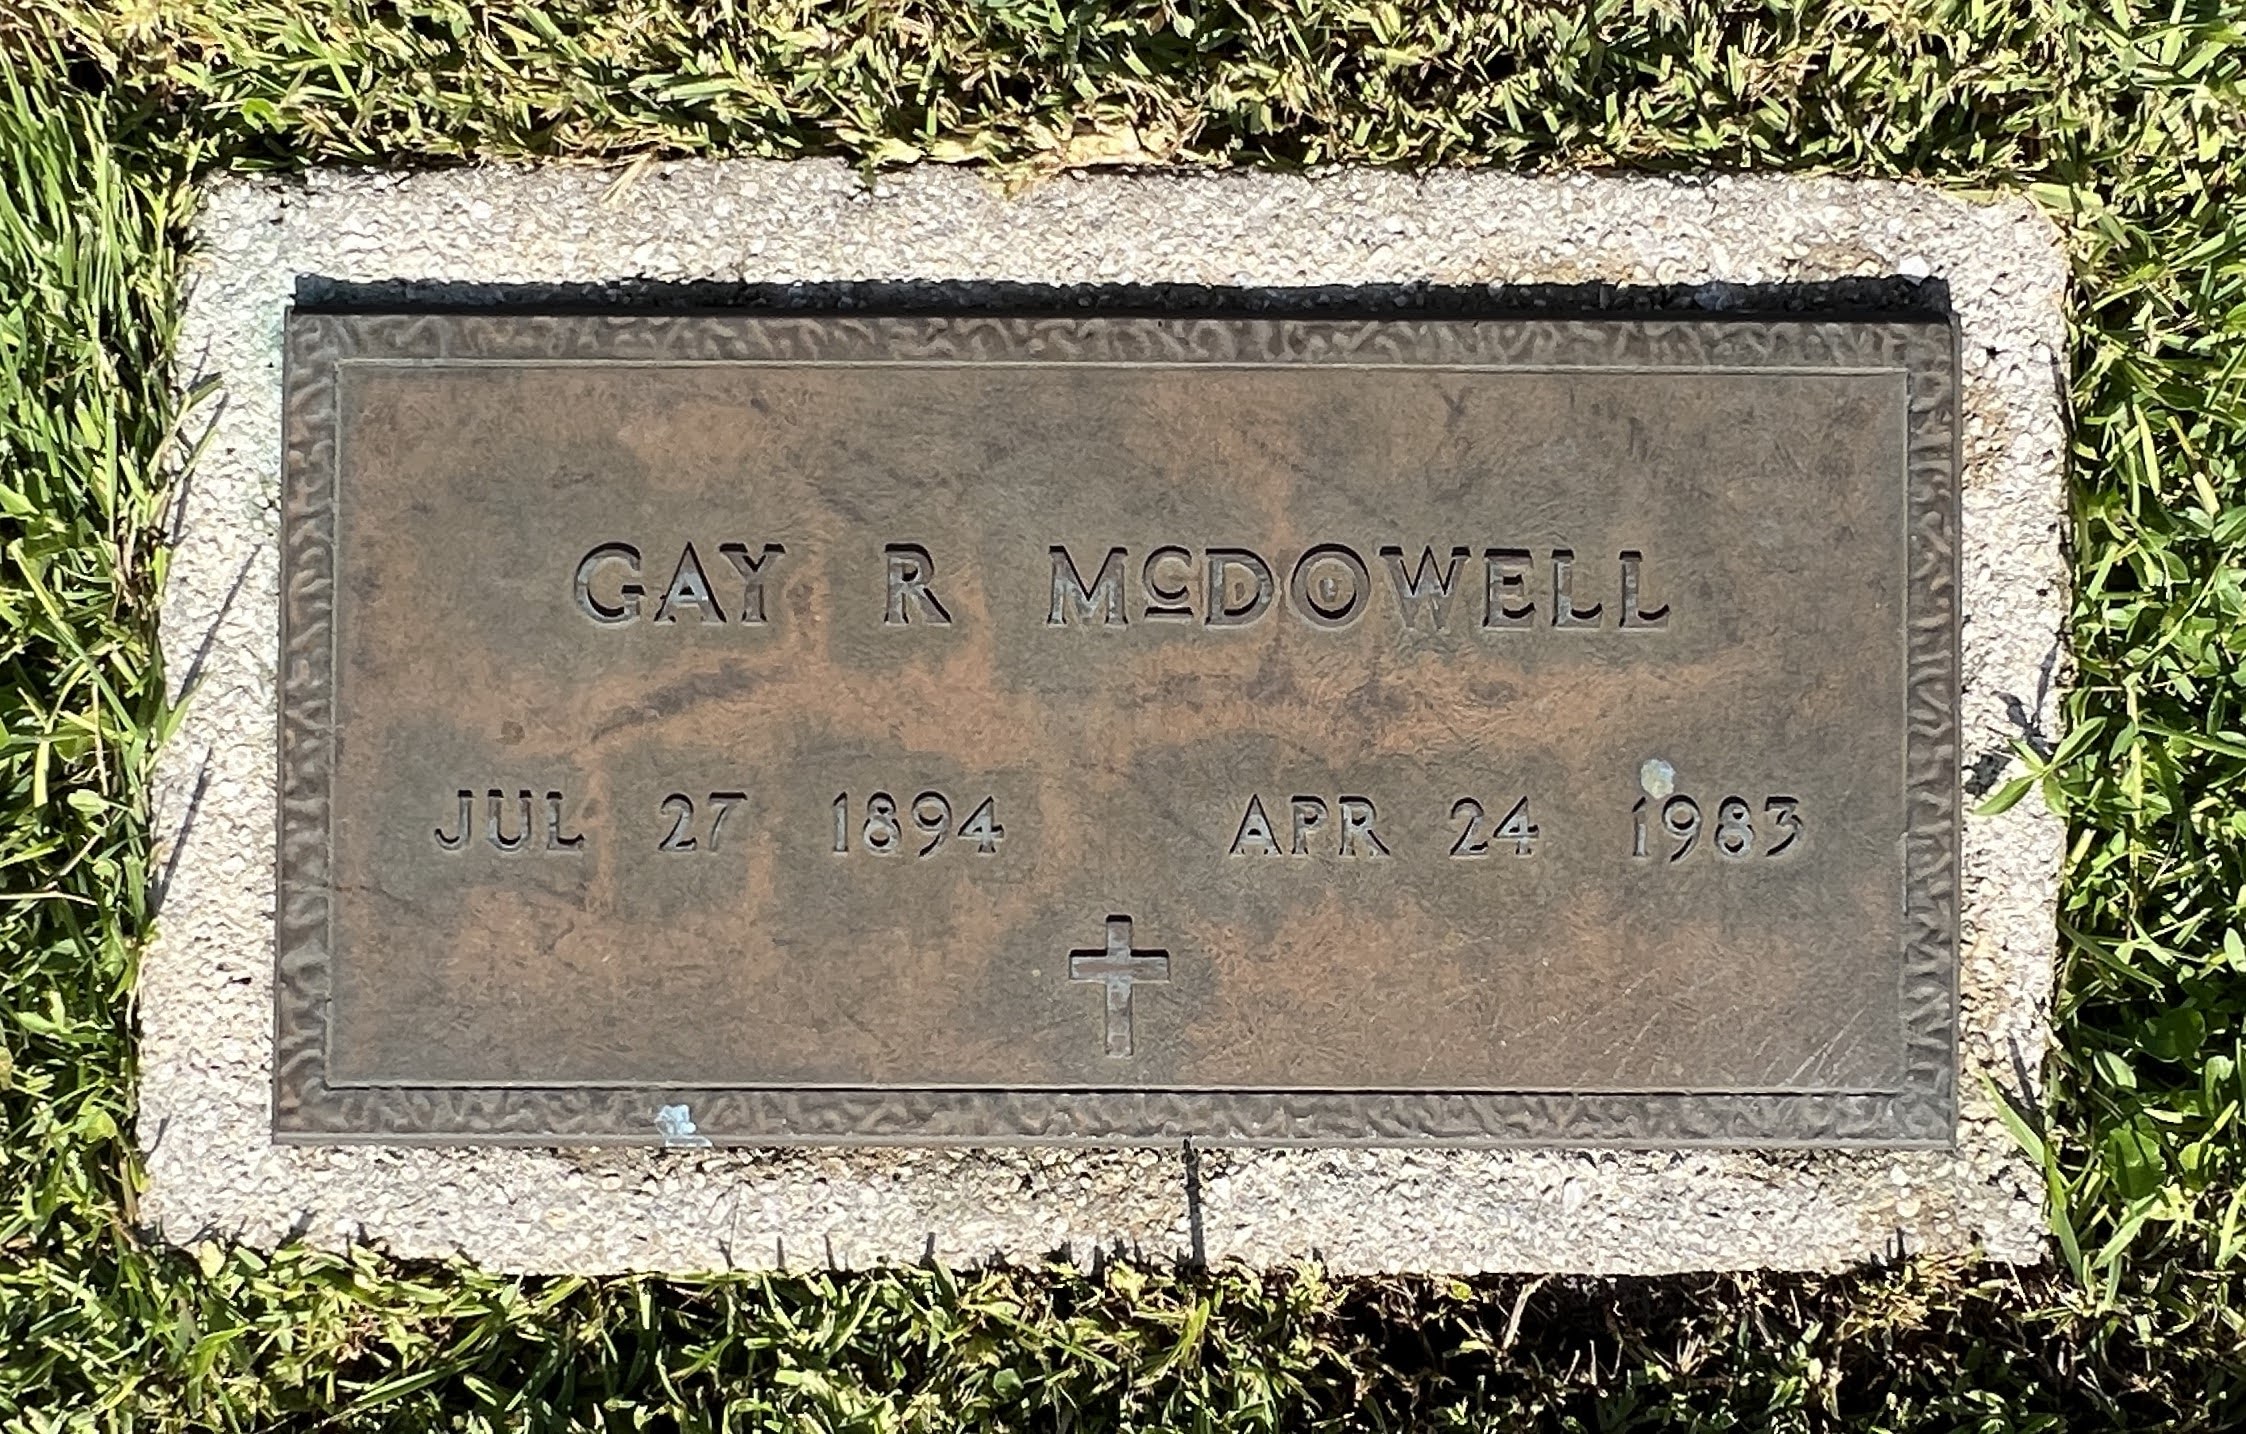 Gay R McDowell